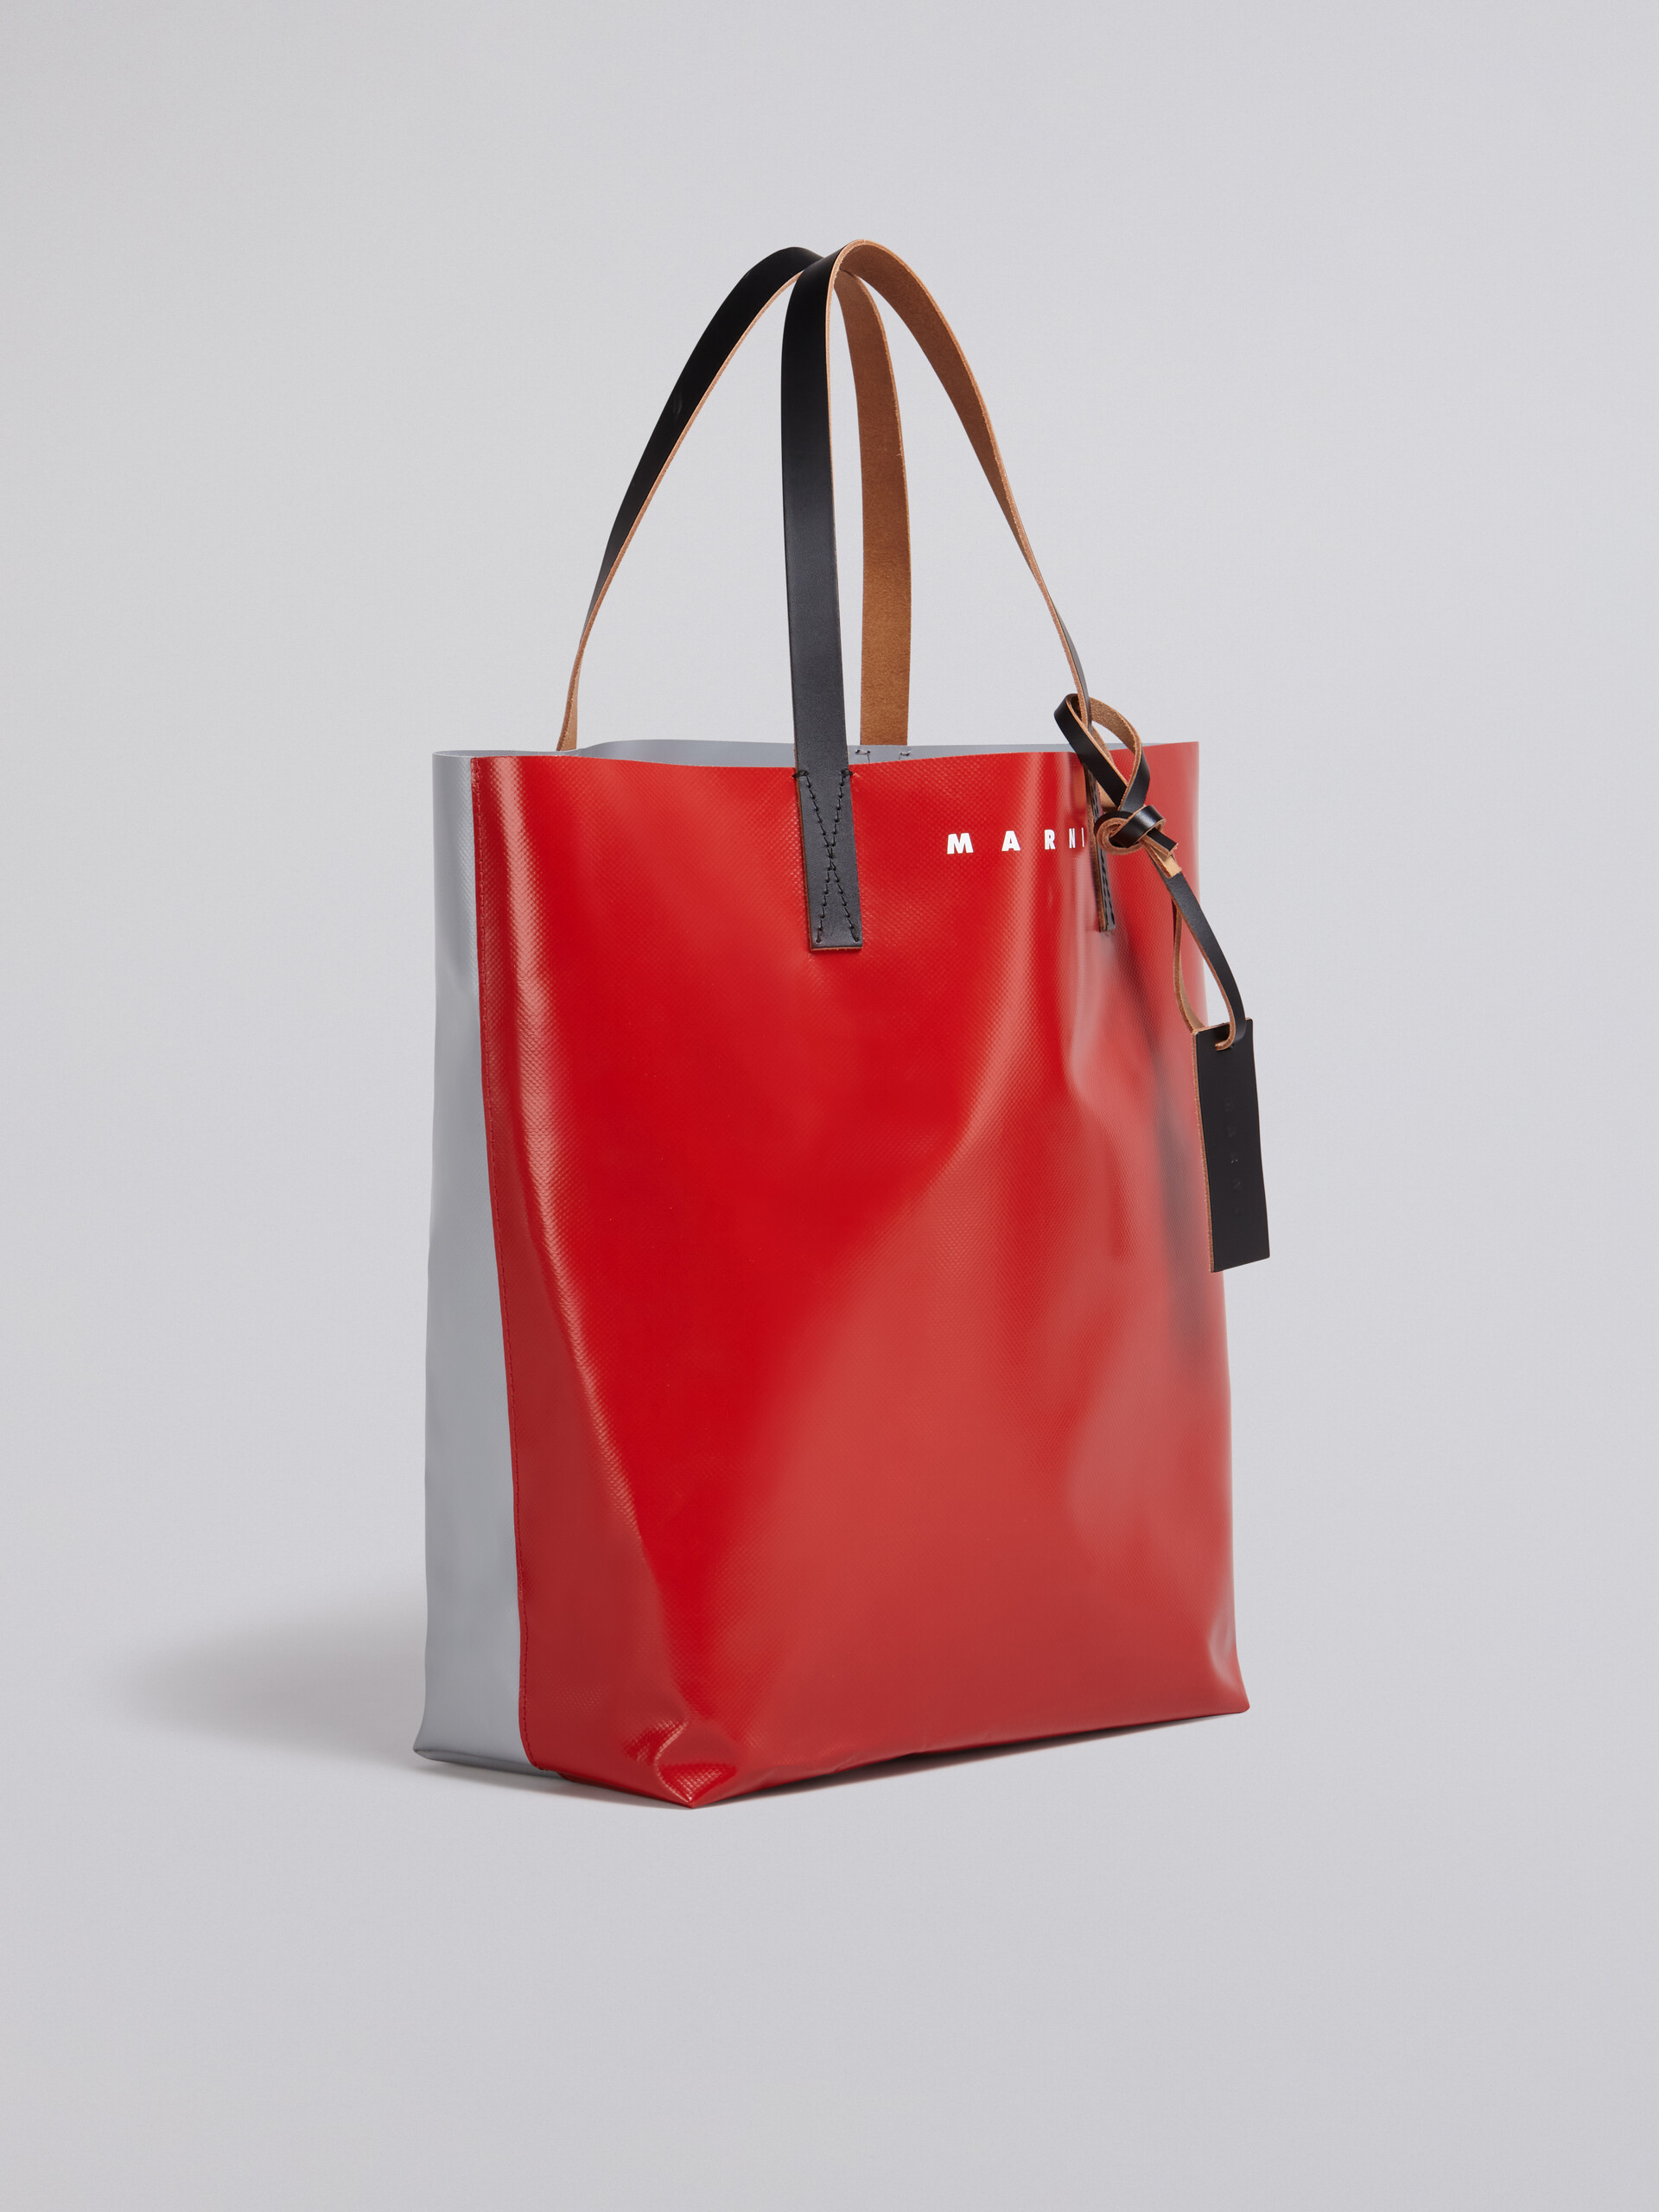 PVC-Shopper mit Kalbslederhenkeln in Rot und Grau - Shopper - Image 5